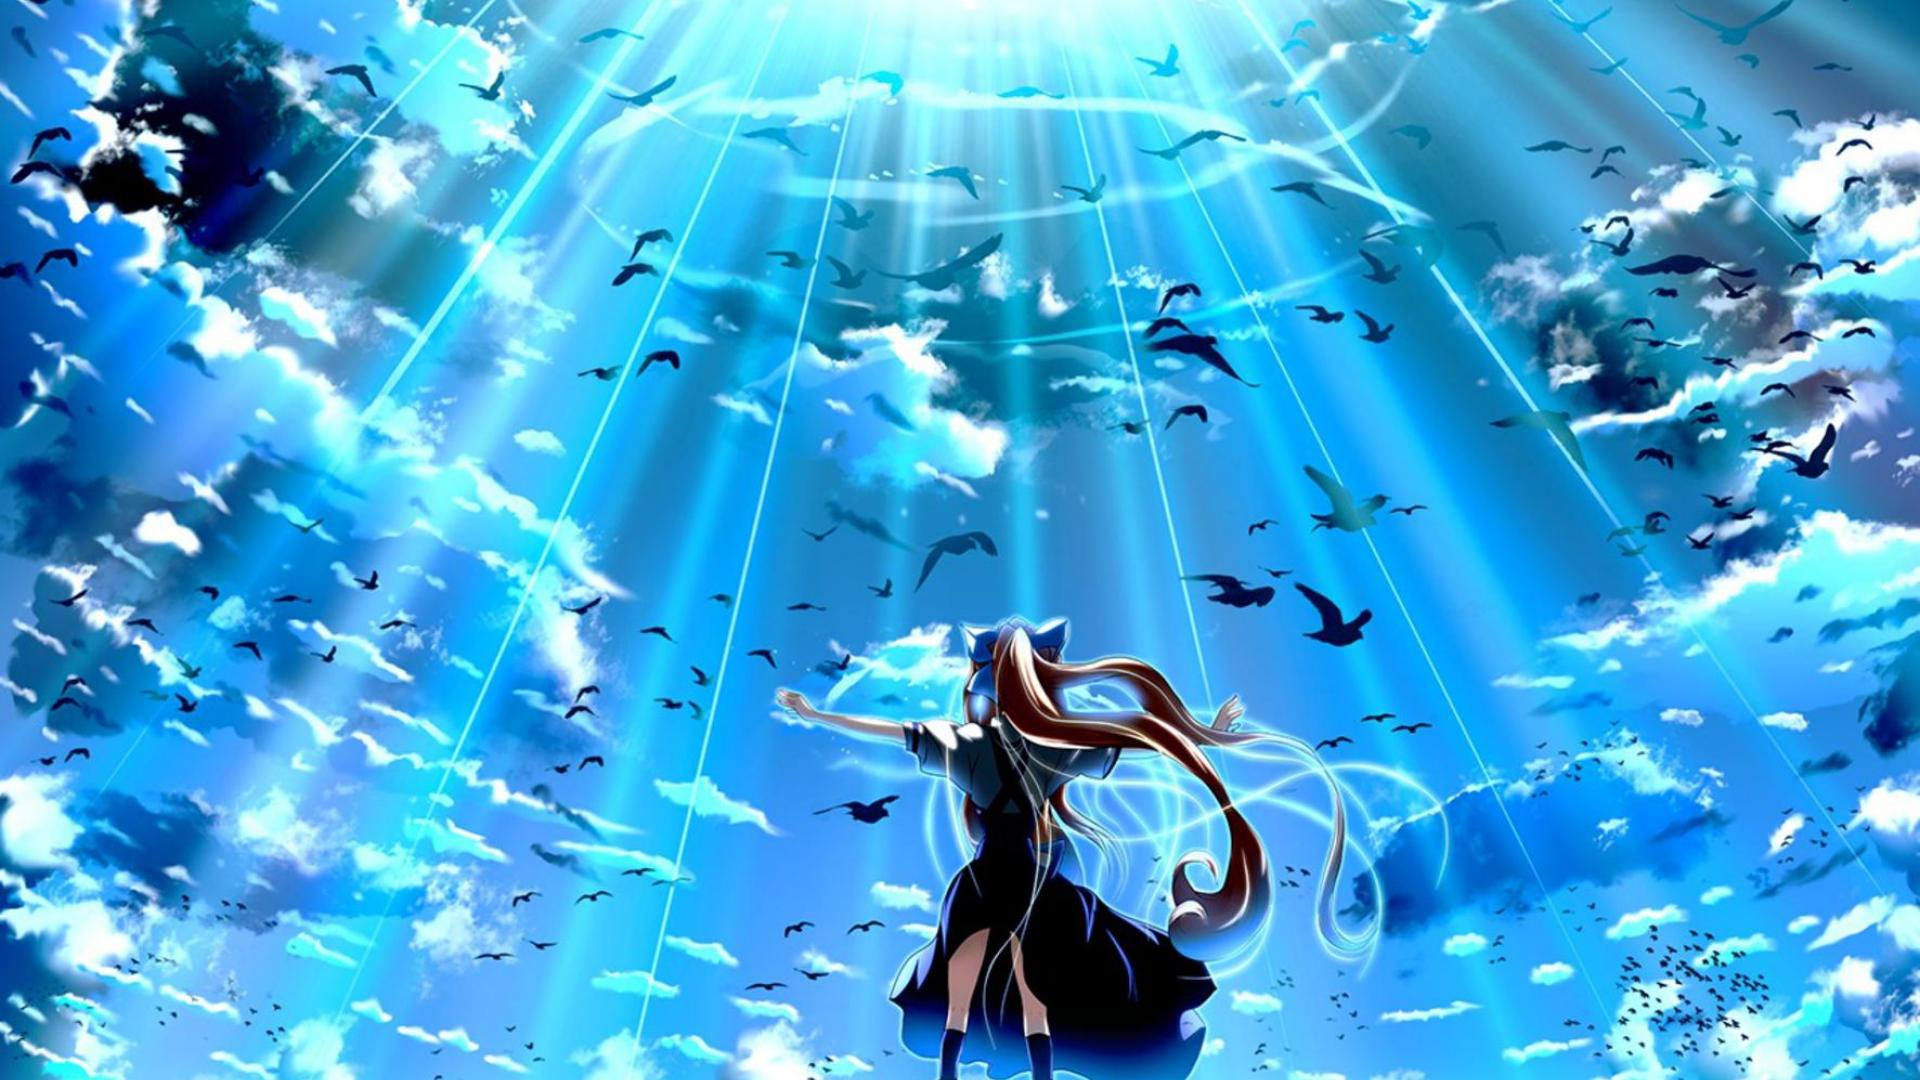 Download Free 1080p Anime Backgrounds | PixelsTalk.Net